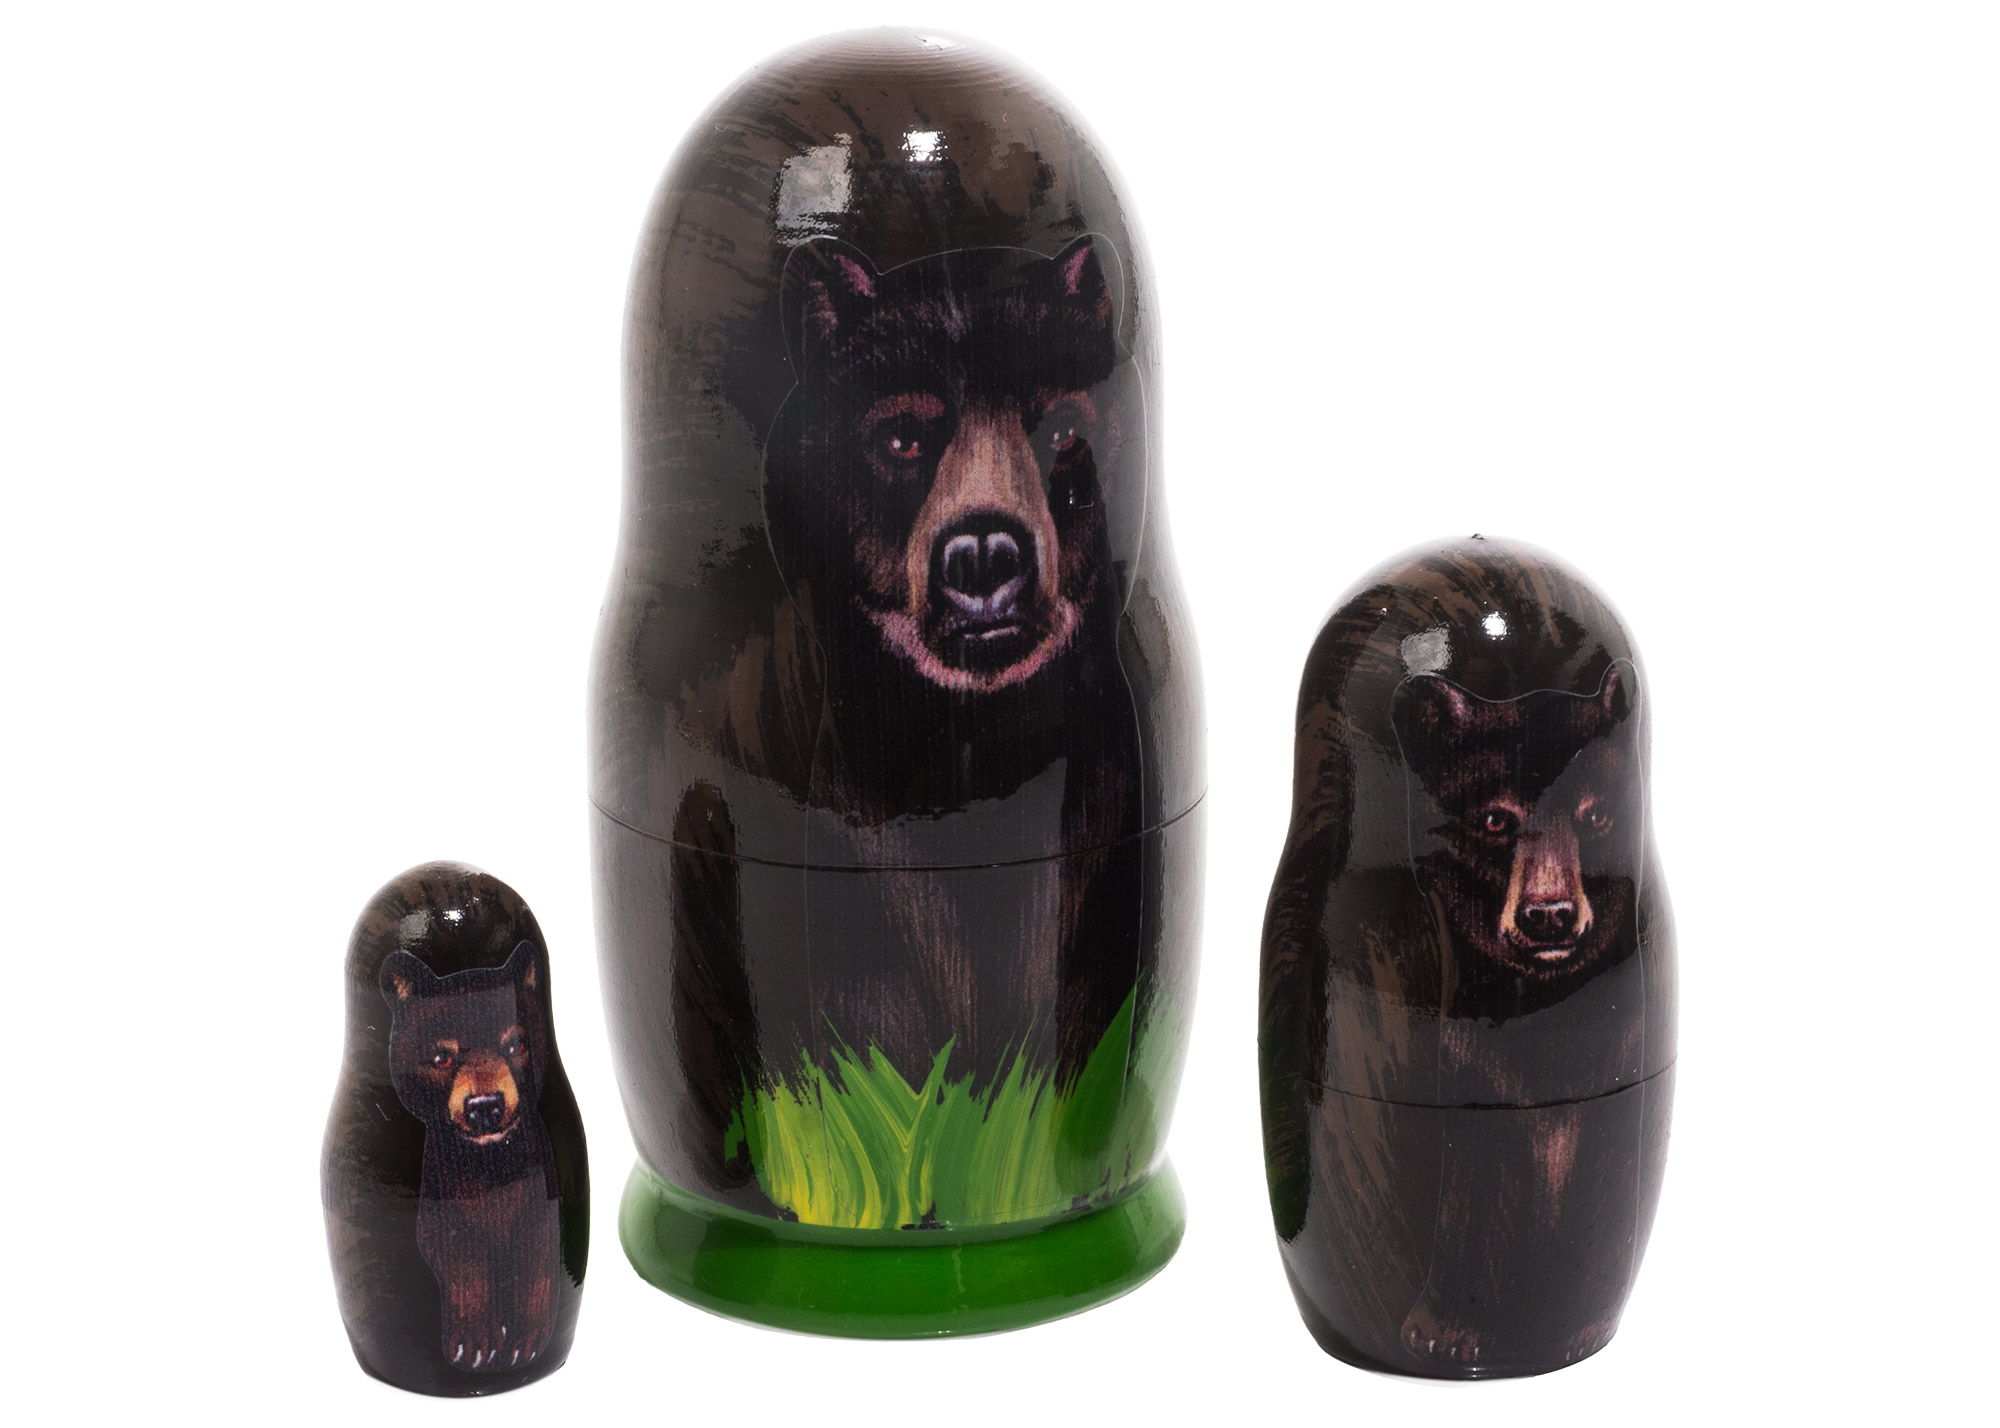 Buy Black Bear Nesting Doll 3pc./3.5" at GoldenCockerel.com